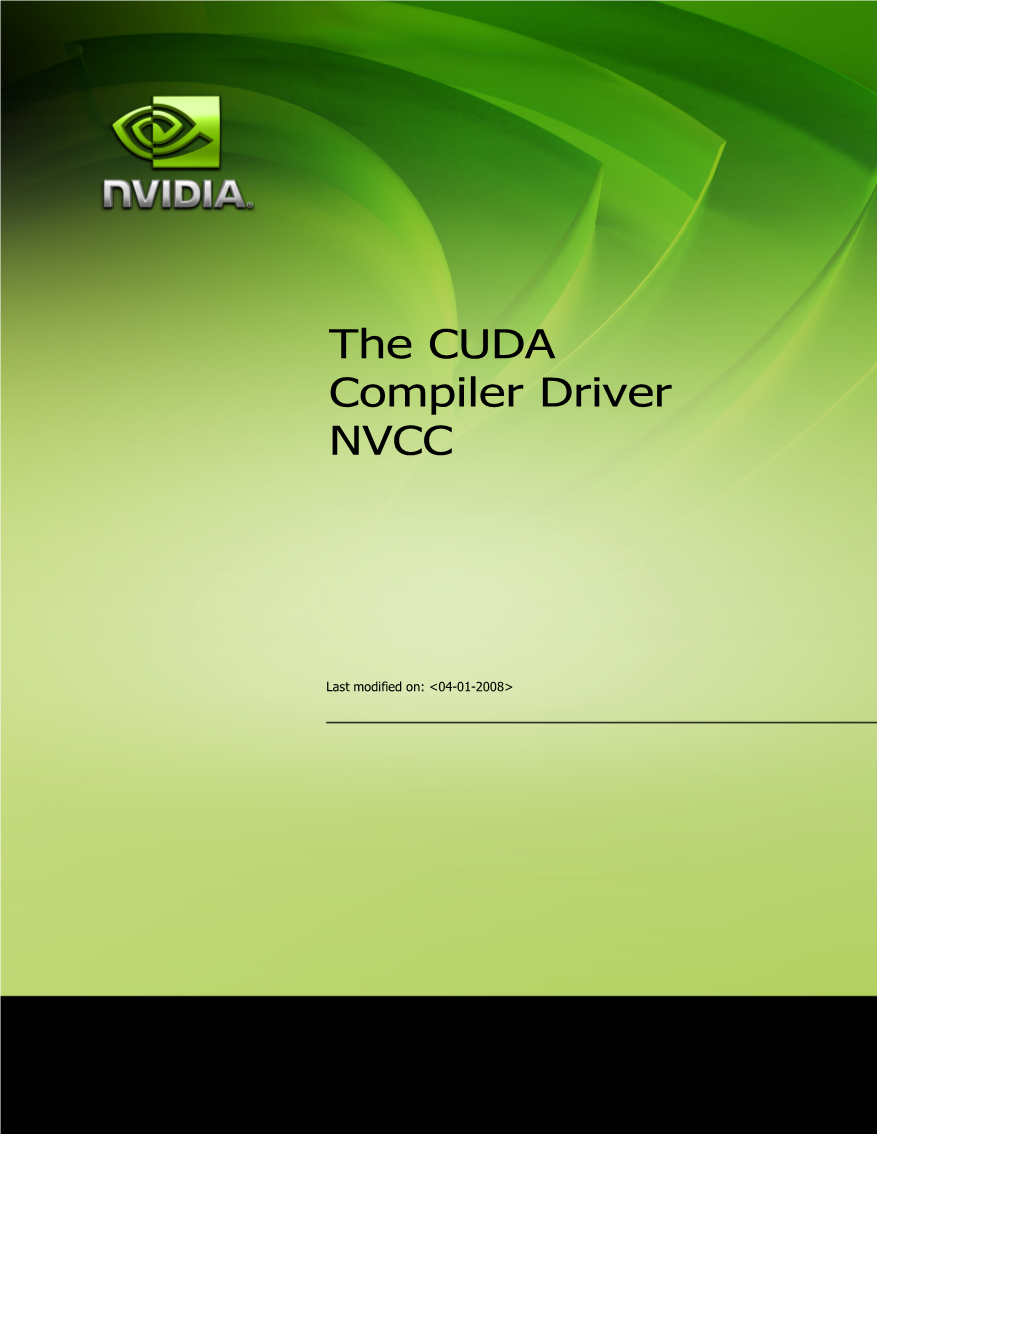 The CUDA Compiler Driver NVCC